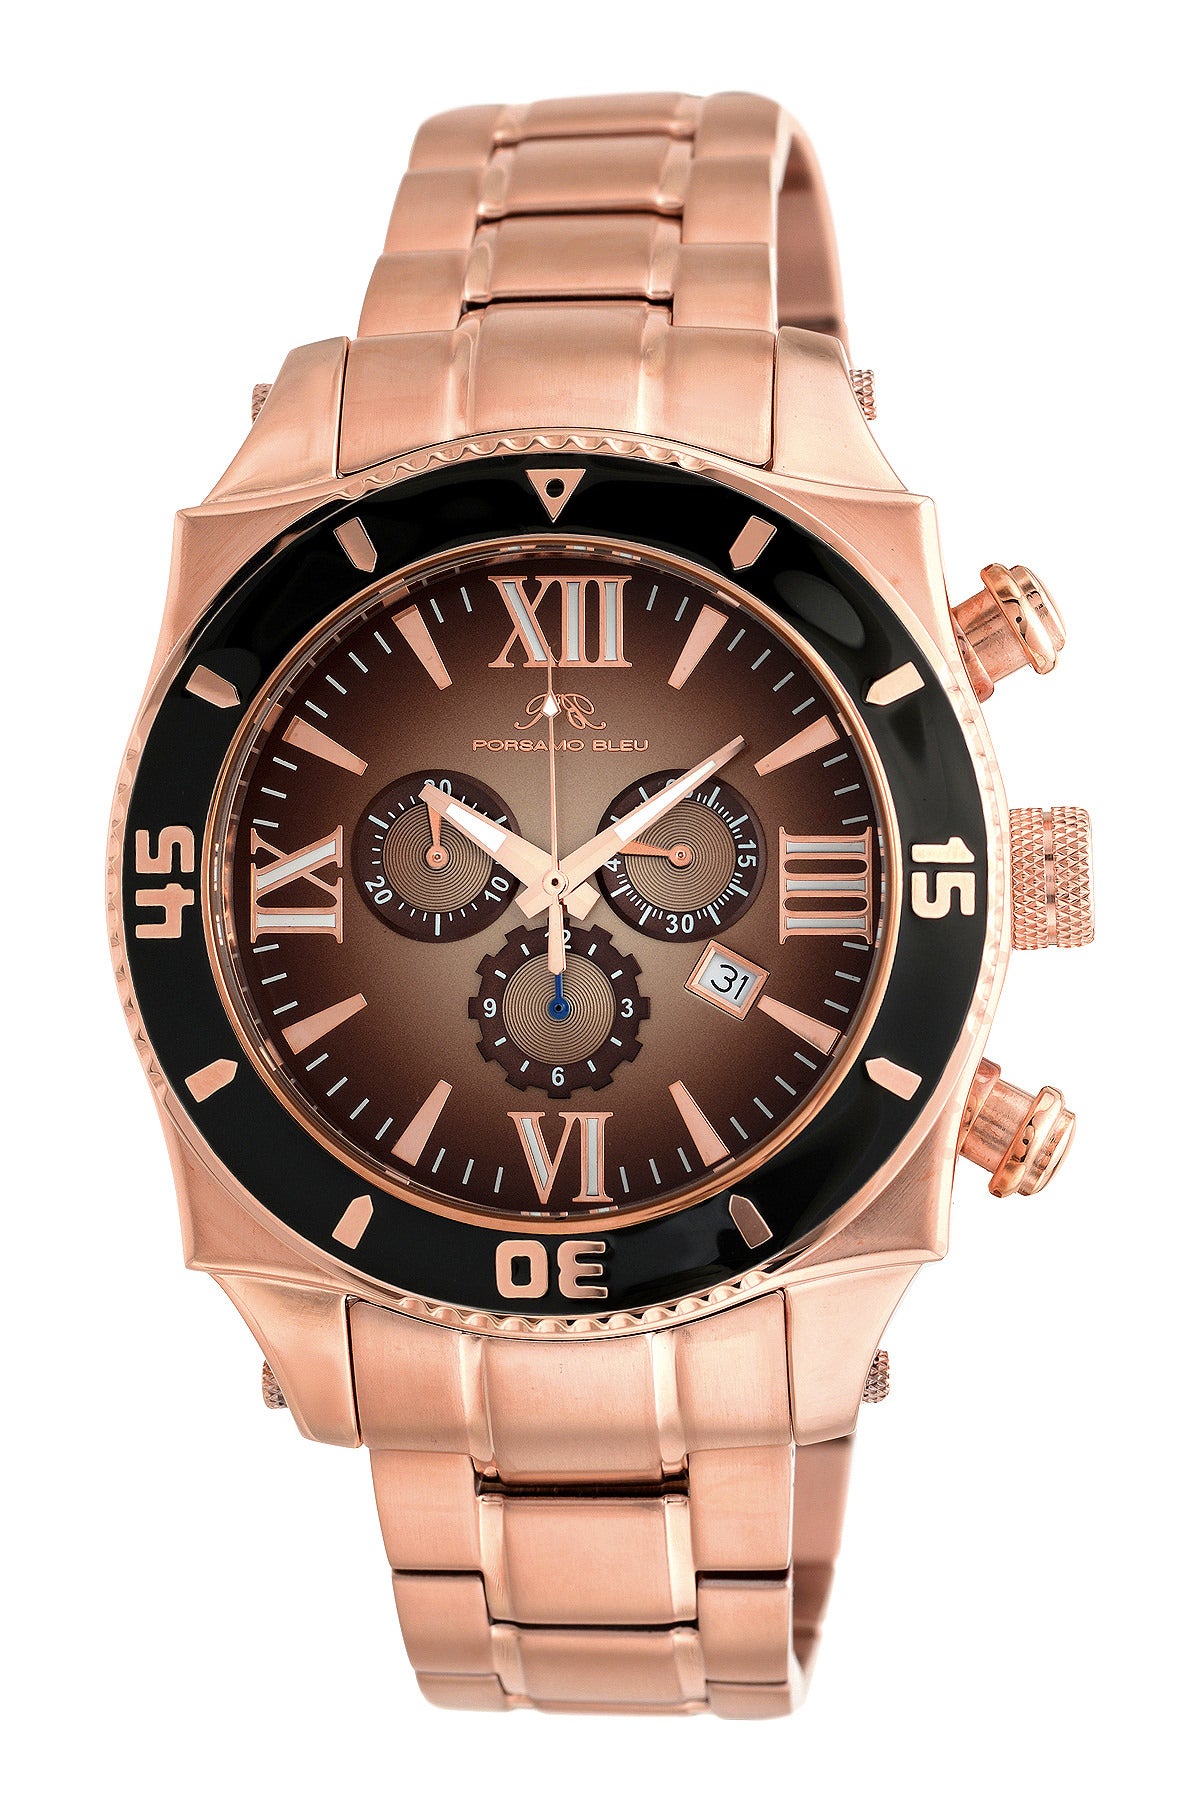 Porsamo Bleu Milan G luxury chronograph men's stainless steel watch, rose, black 071DMIS